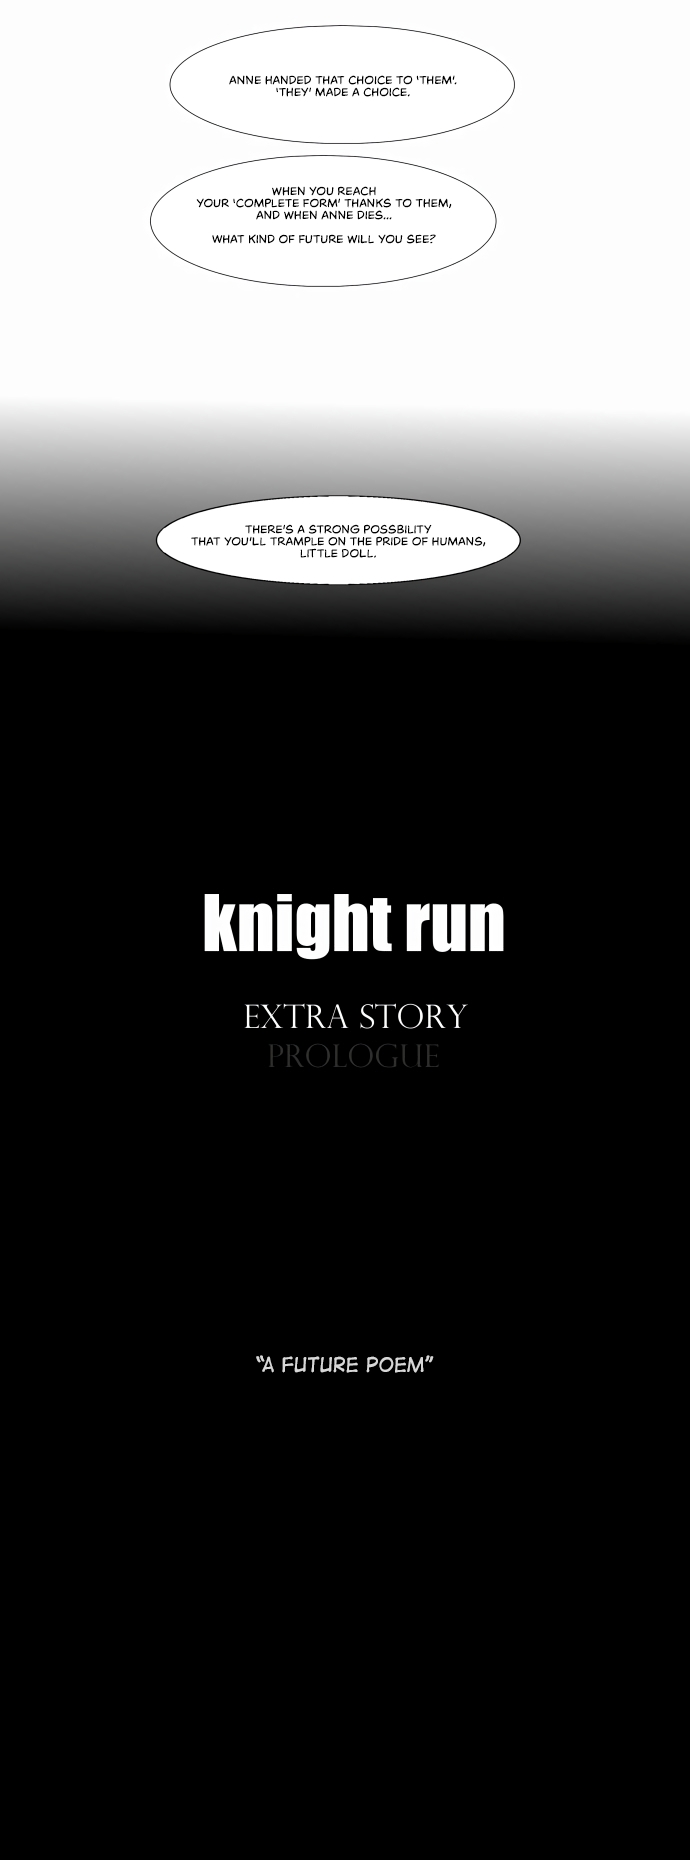 Knight Run Vol. 3 Ch. 194 Hero Extra Story 3 | A Future Poem